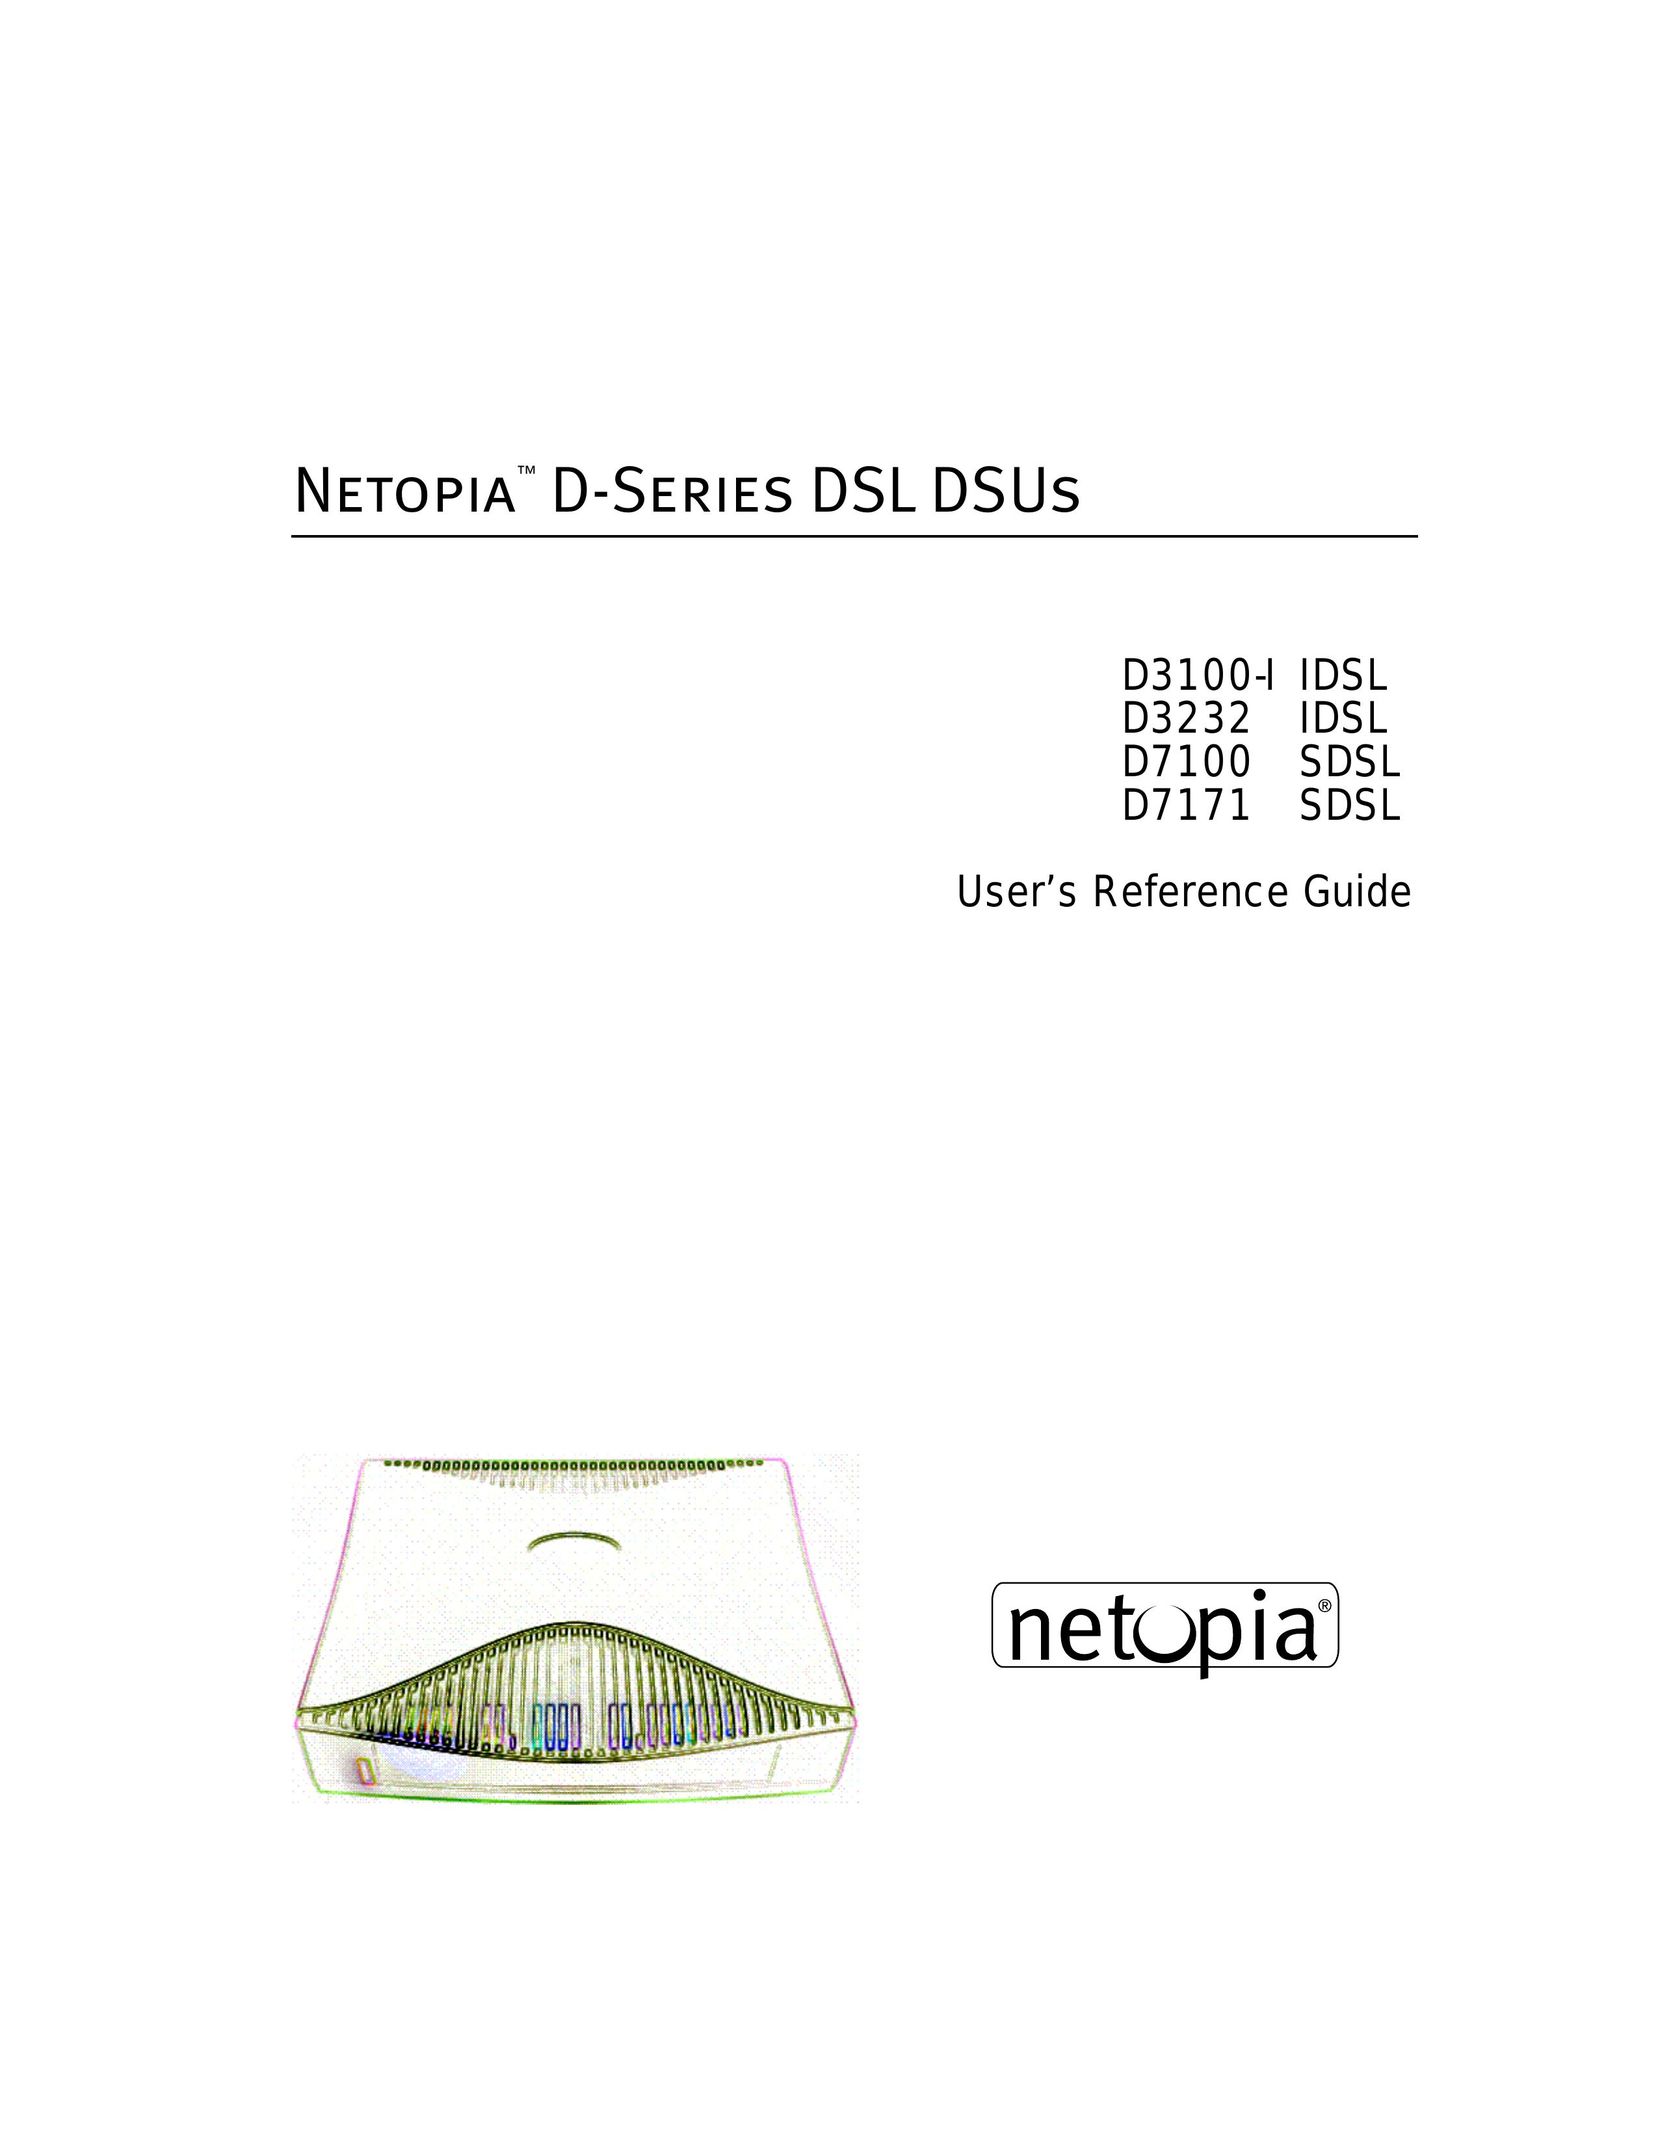 Netopia D7100 SDSL Network Router User Manual